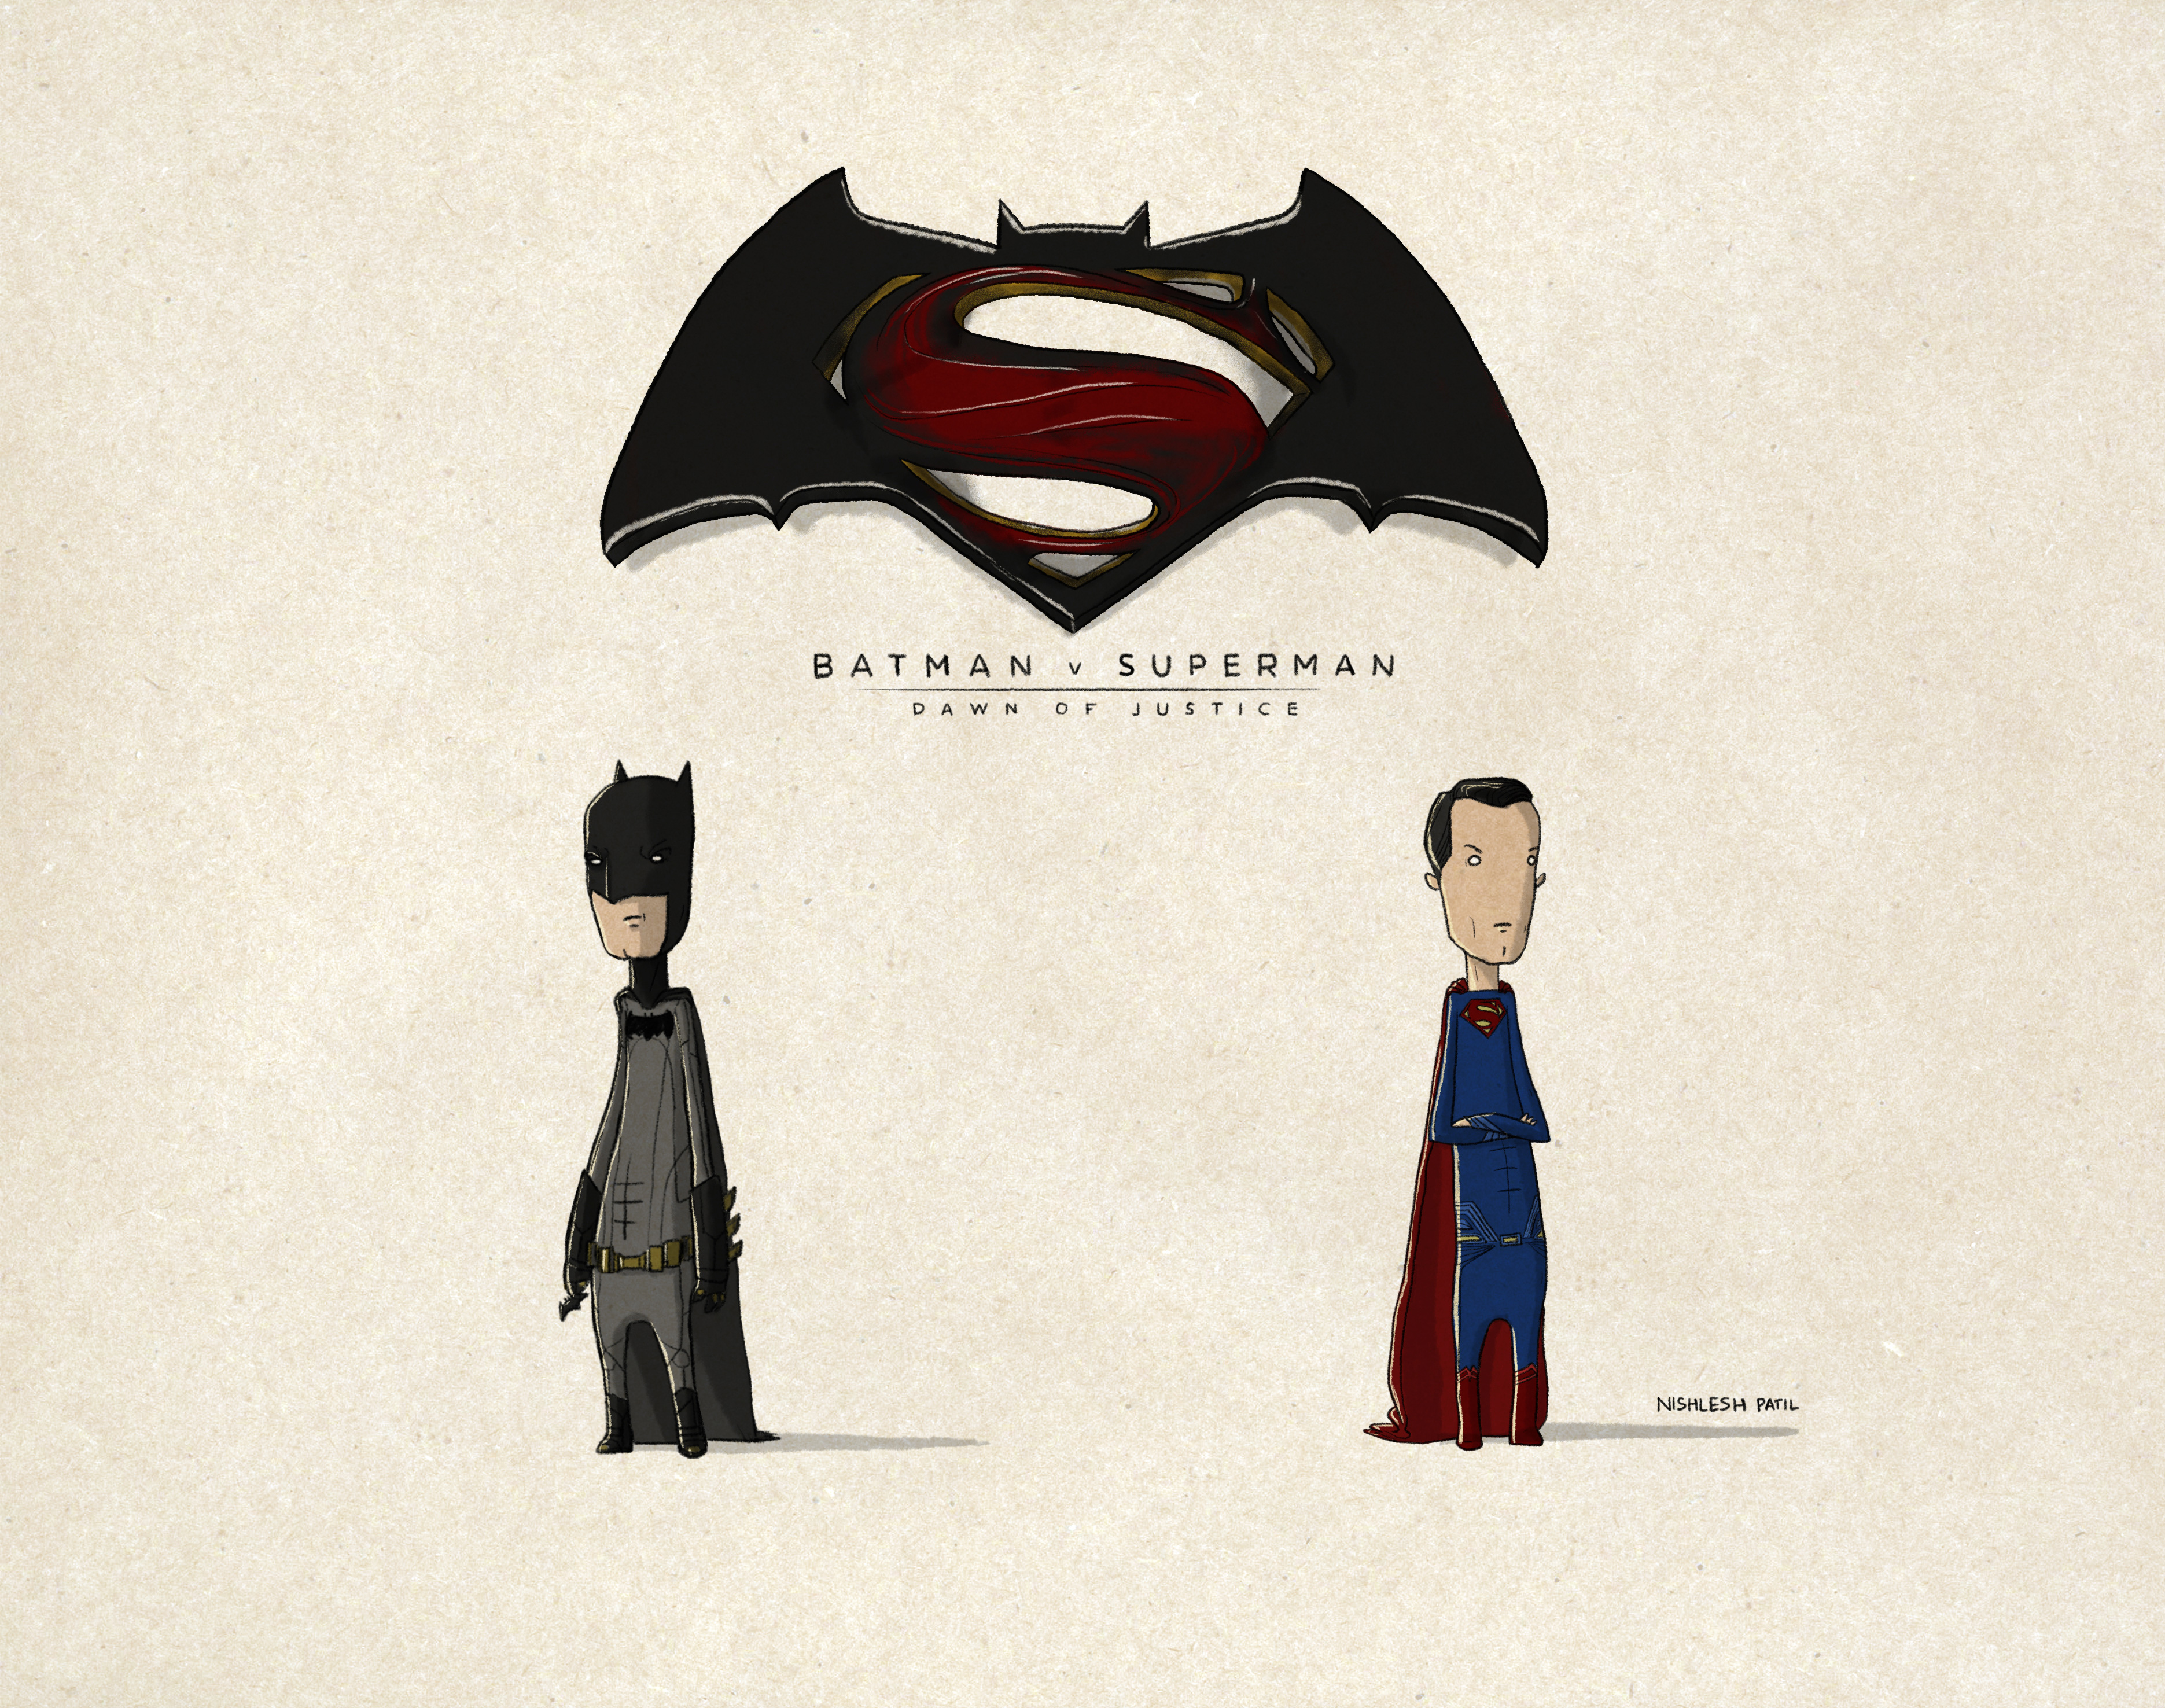 Batman Vs Superman Fan Art, HD Superheroes, 4k Wallpapers, Images,  Backgrounds, Photos and Pictures